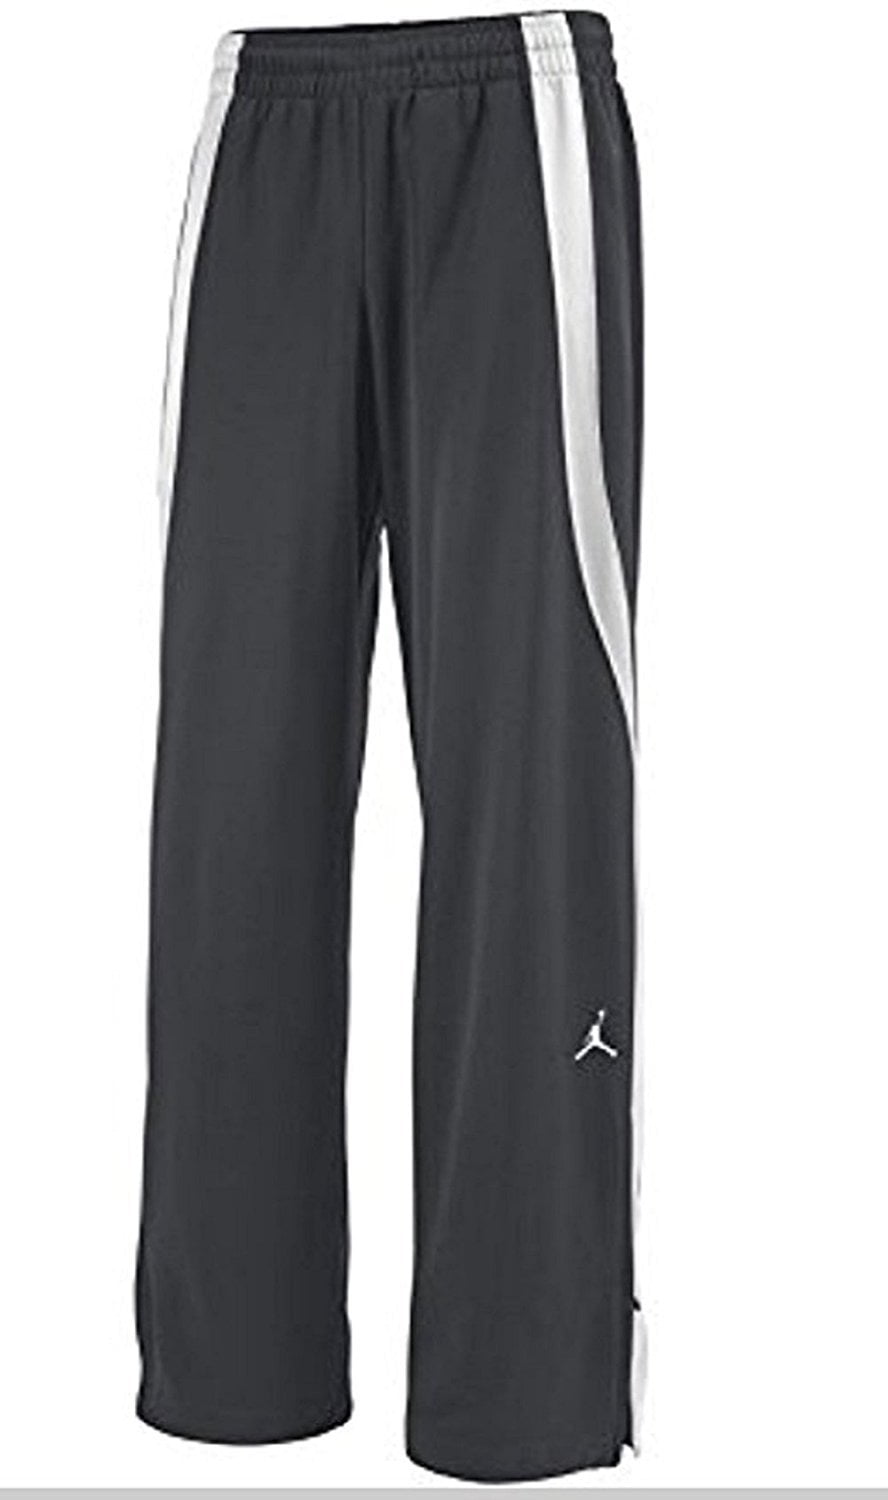 Nike Nike Men S Jordan Warm Up Pants Walmart Com Walmart Com